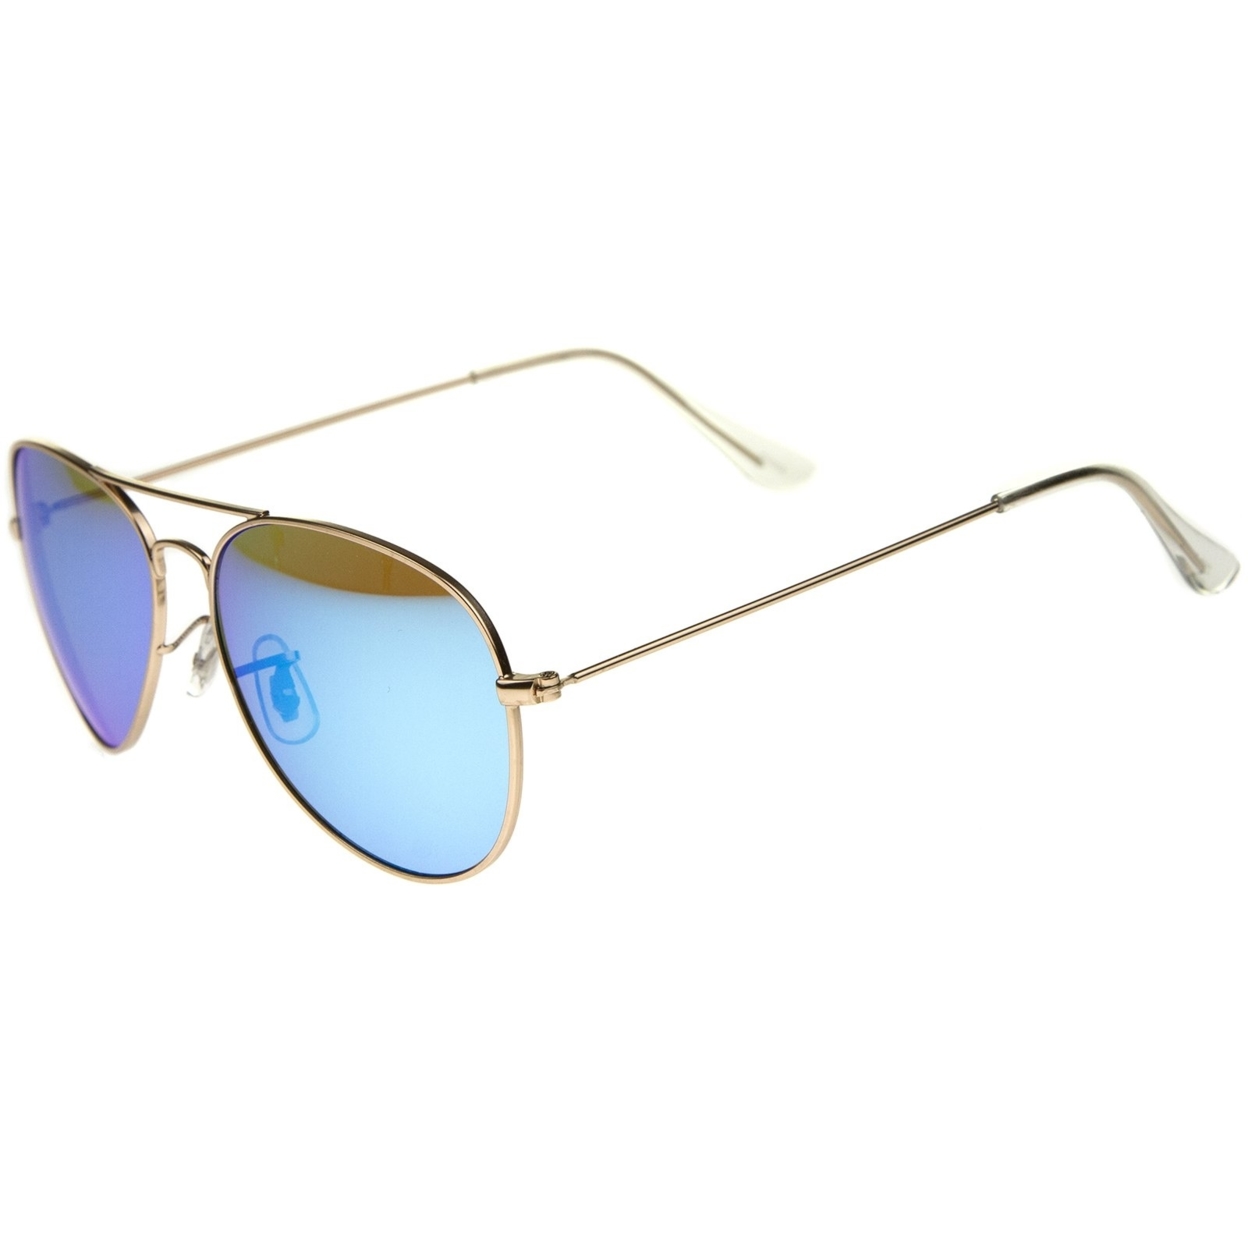 Premium Nickel Plated Frame Multi-Coated Mirror Lens Aviator Sunglasses 59mm - Gold / Green Mirror